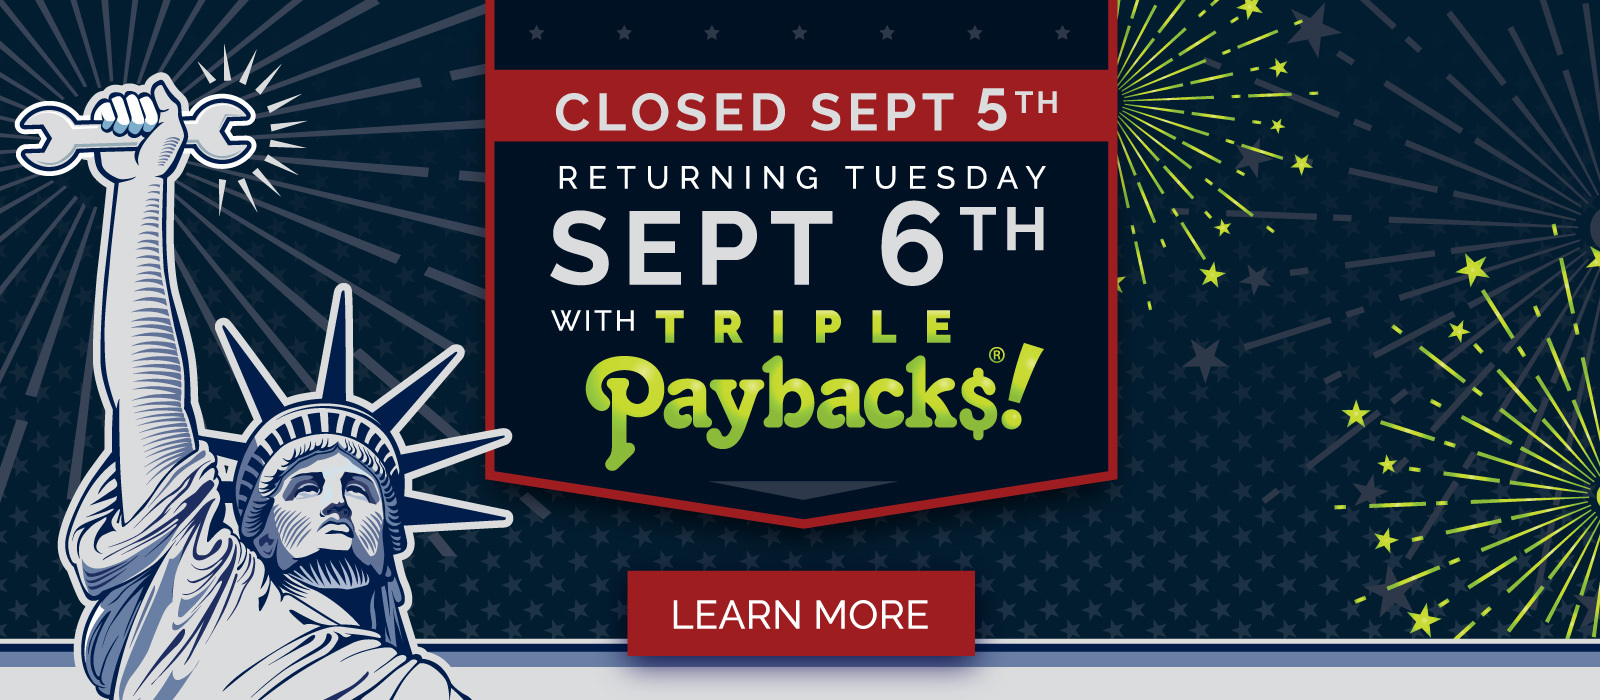 Triple Payback$ September 6th